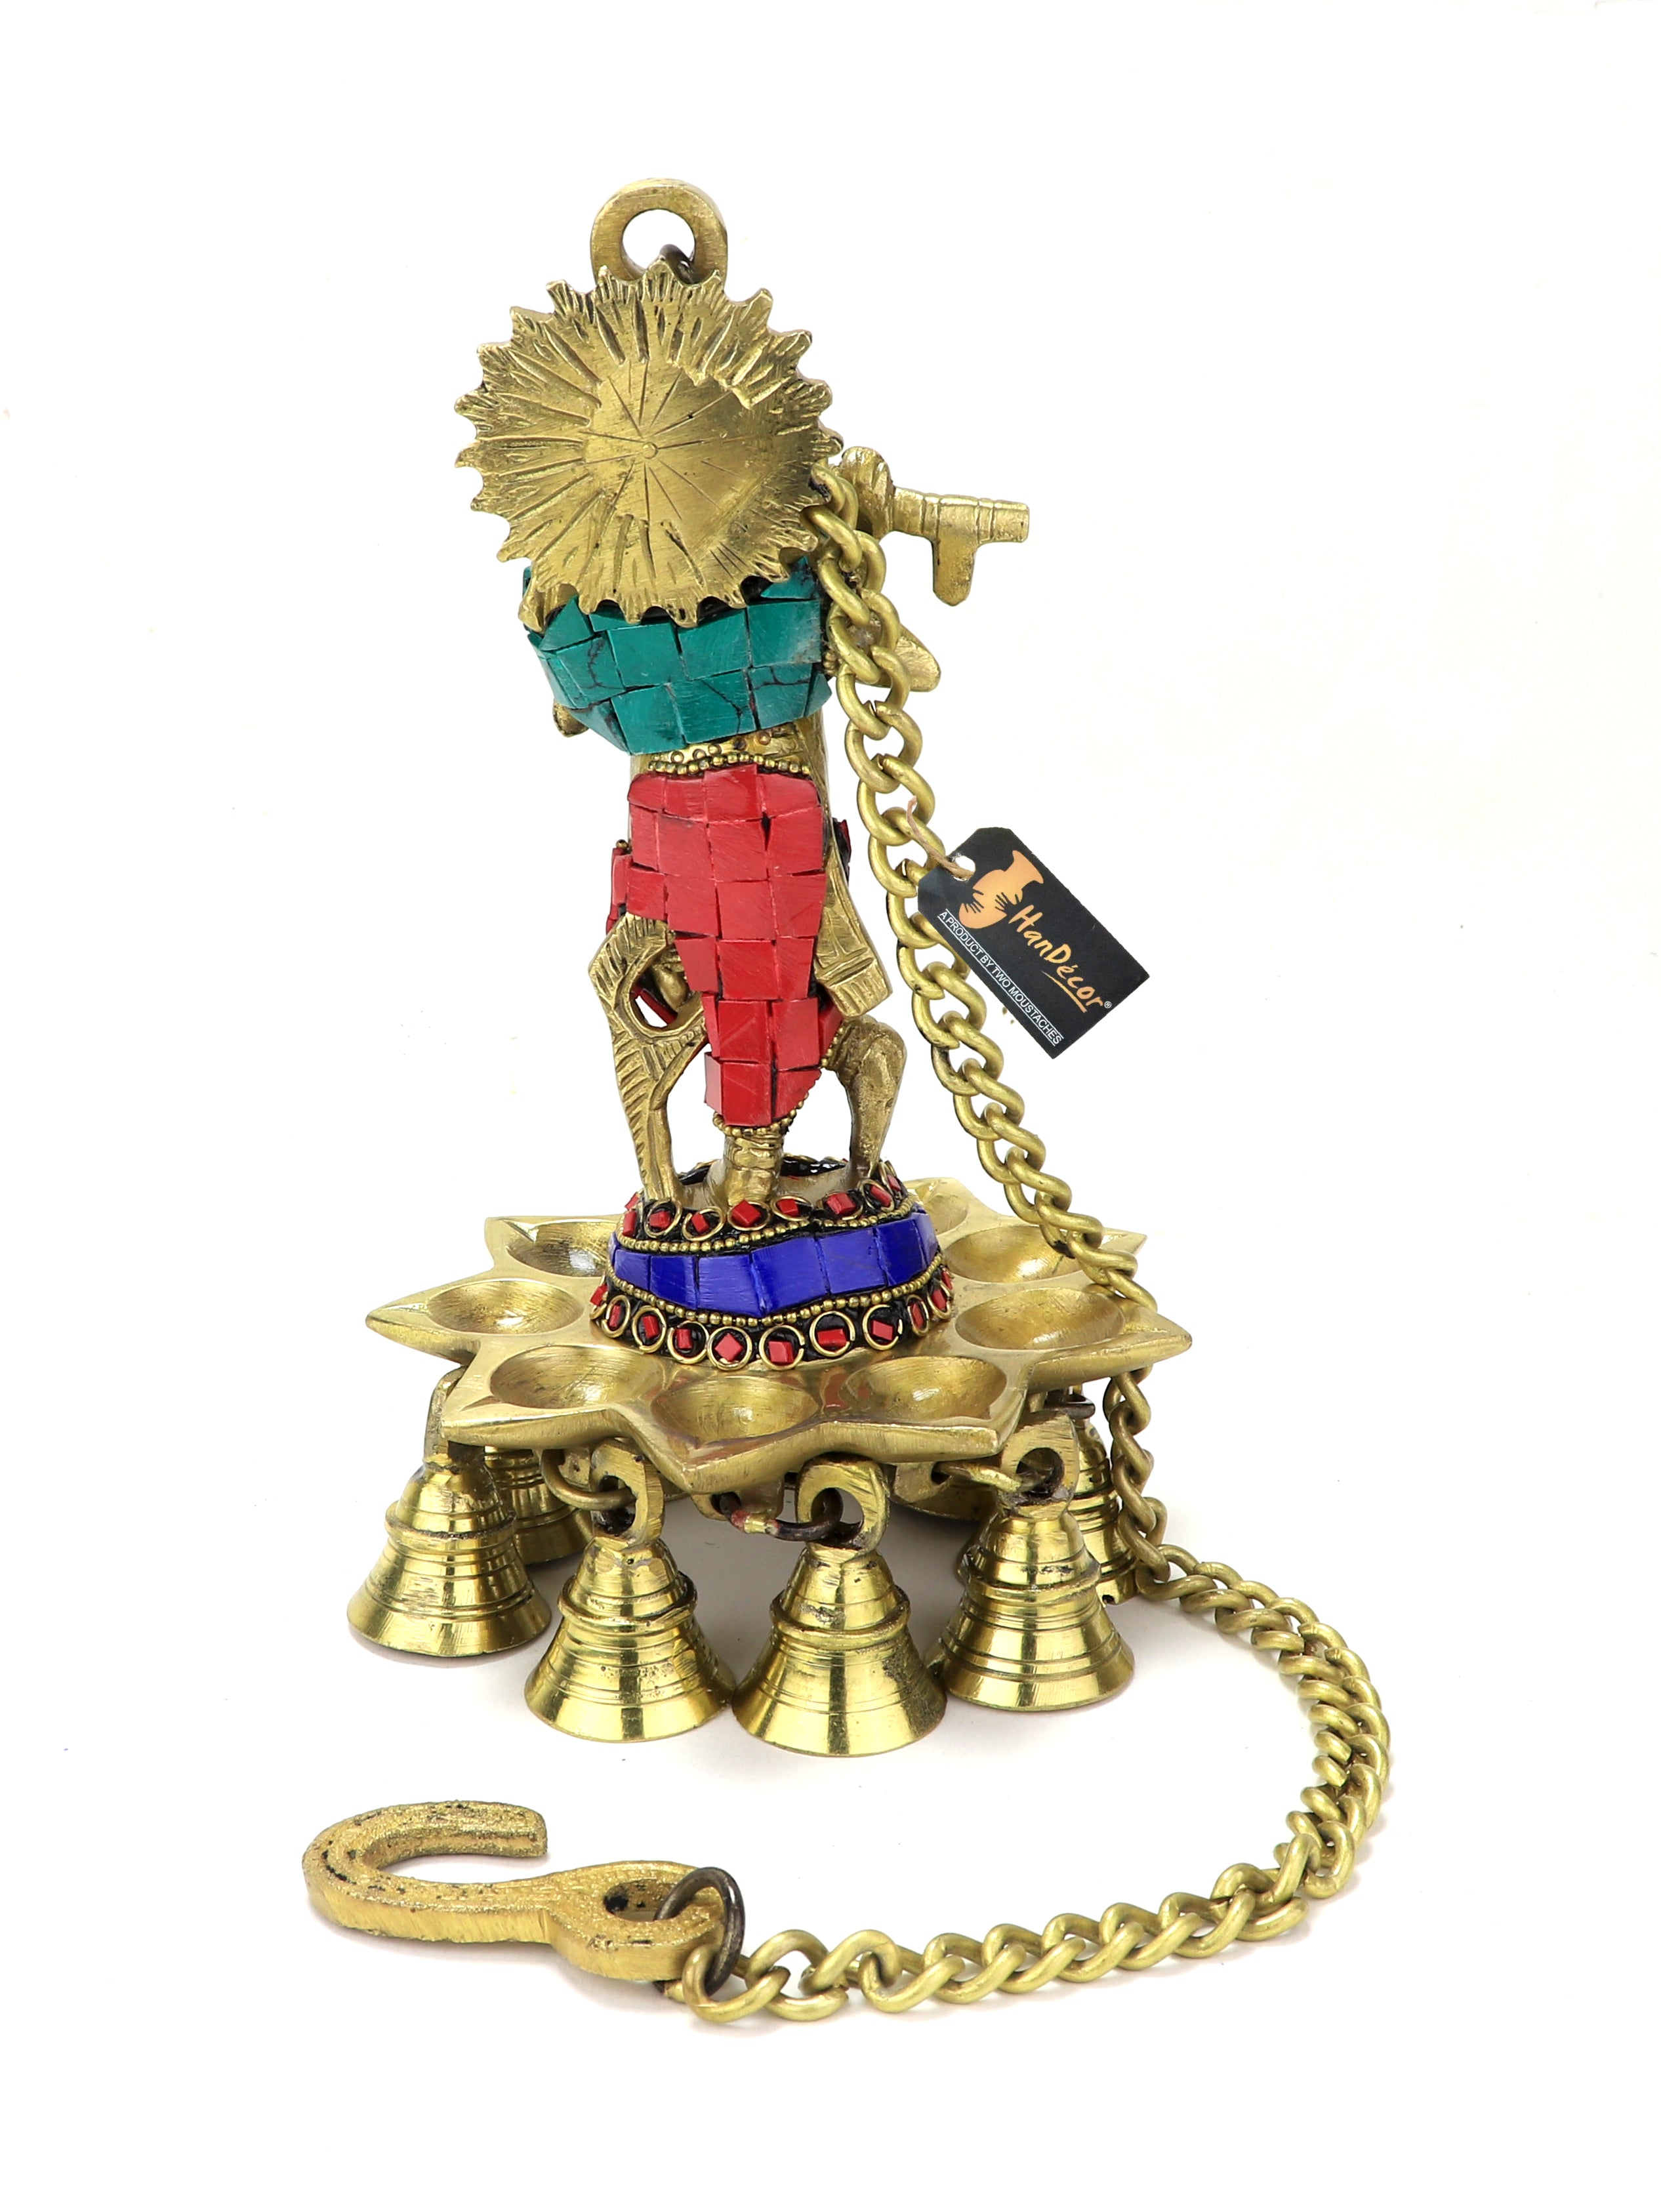 Gemstone Work Krishna Design Brass Hanging Diya, 8 Inches